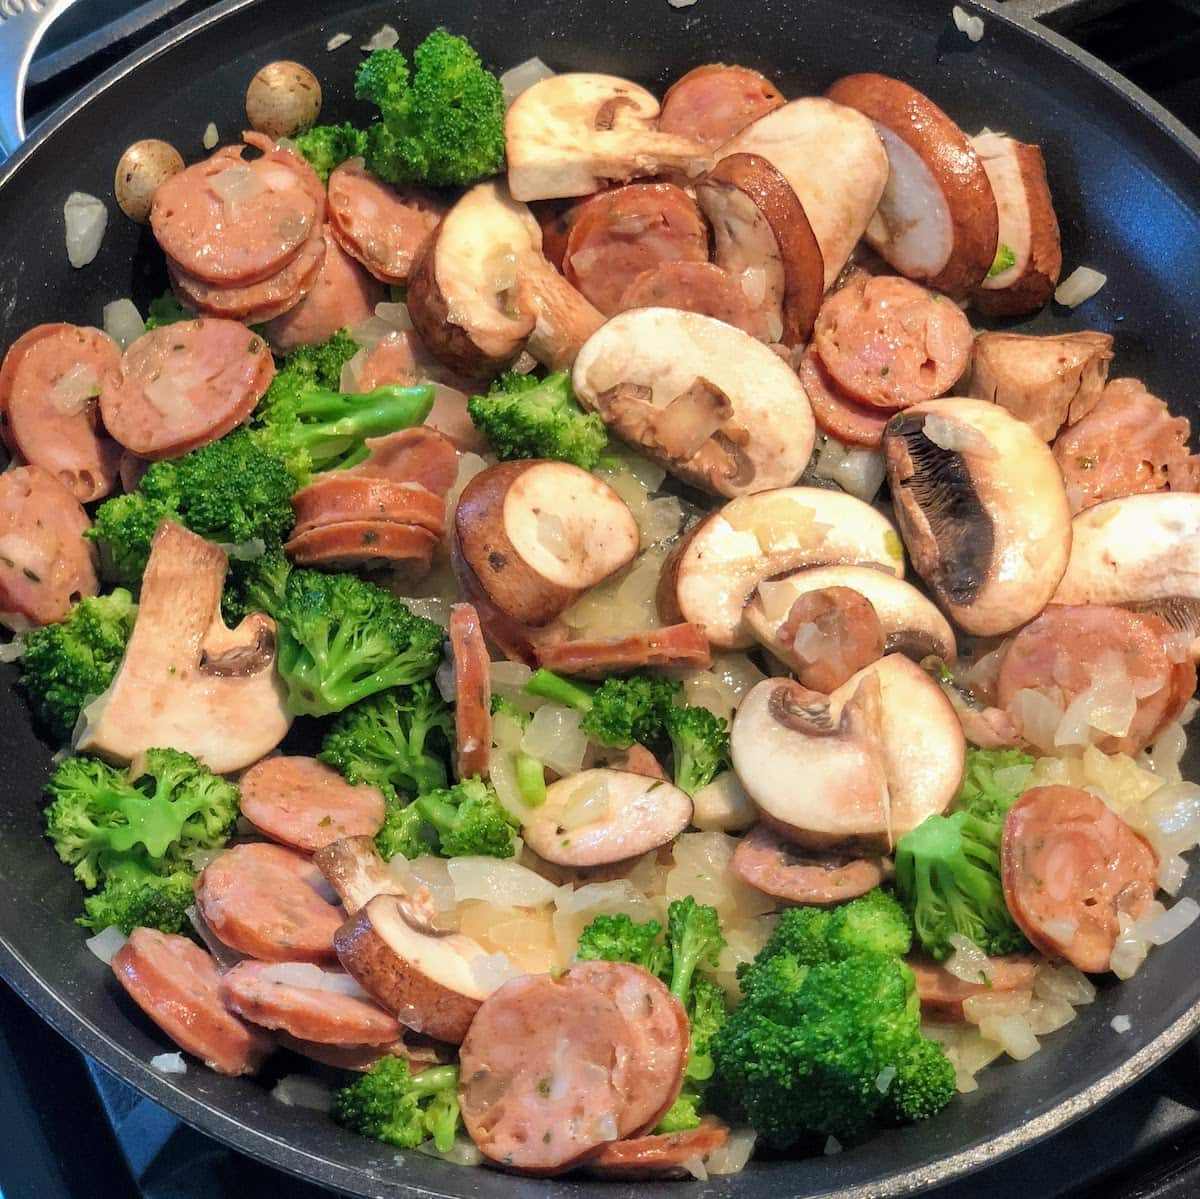 broccoli, mushroom, onion and sausage in pan